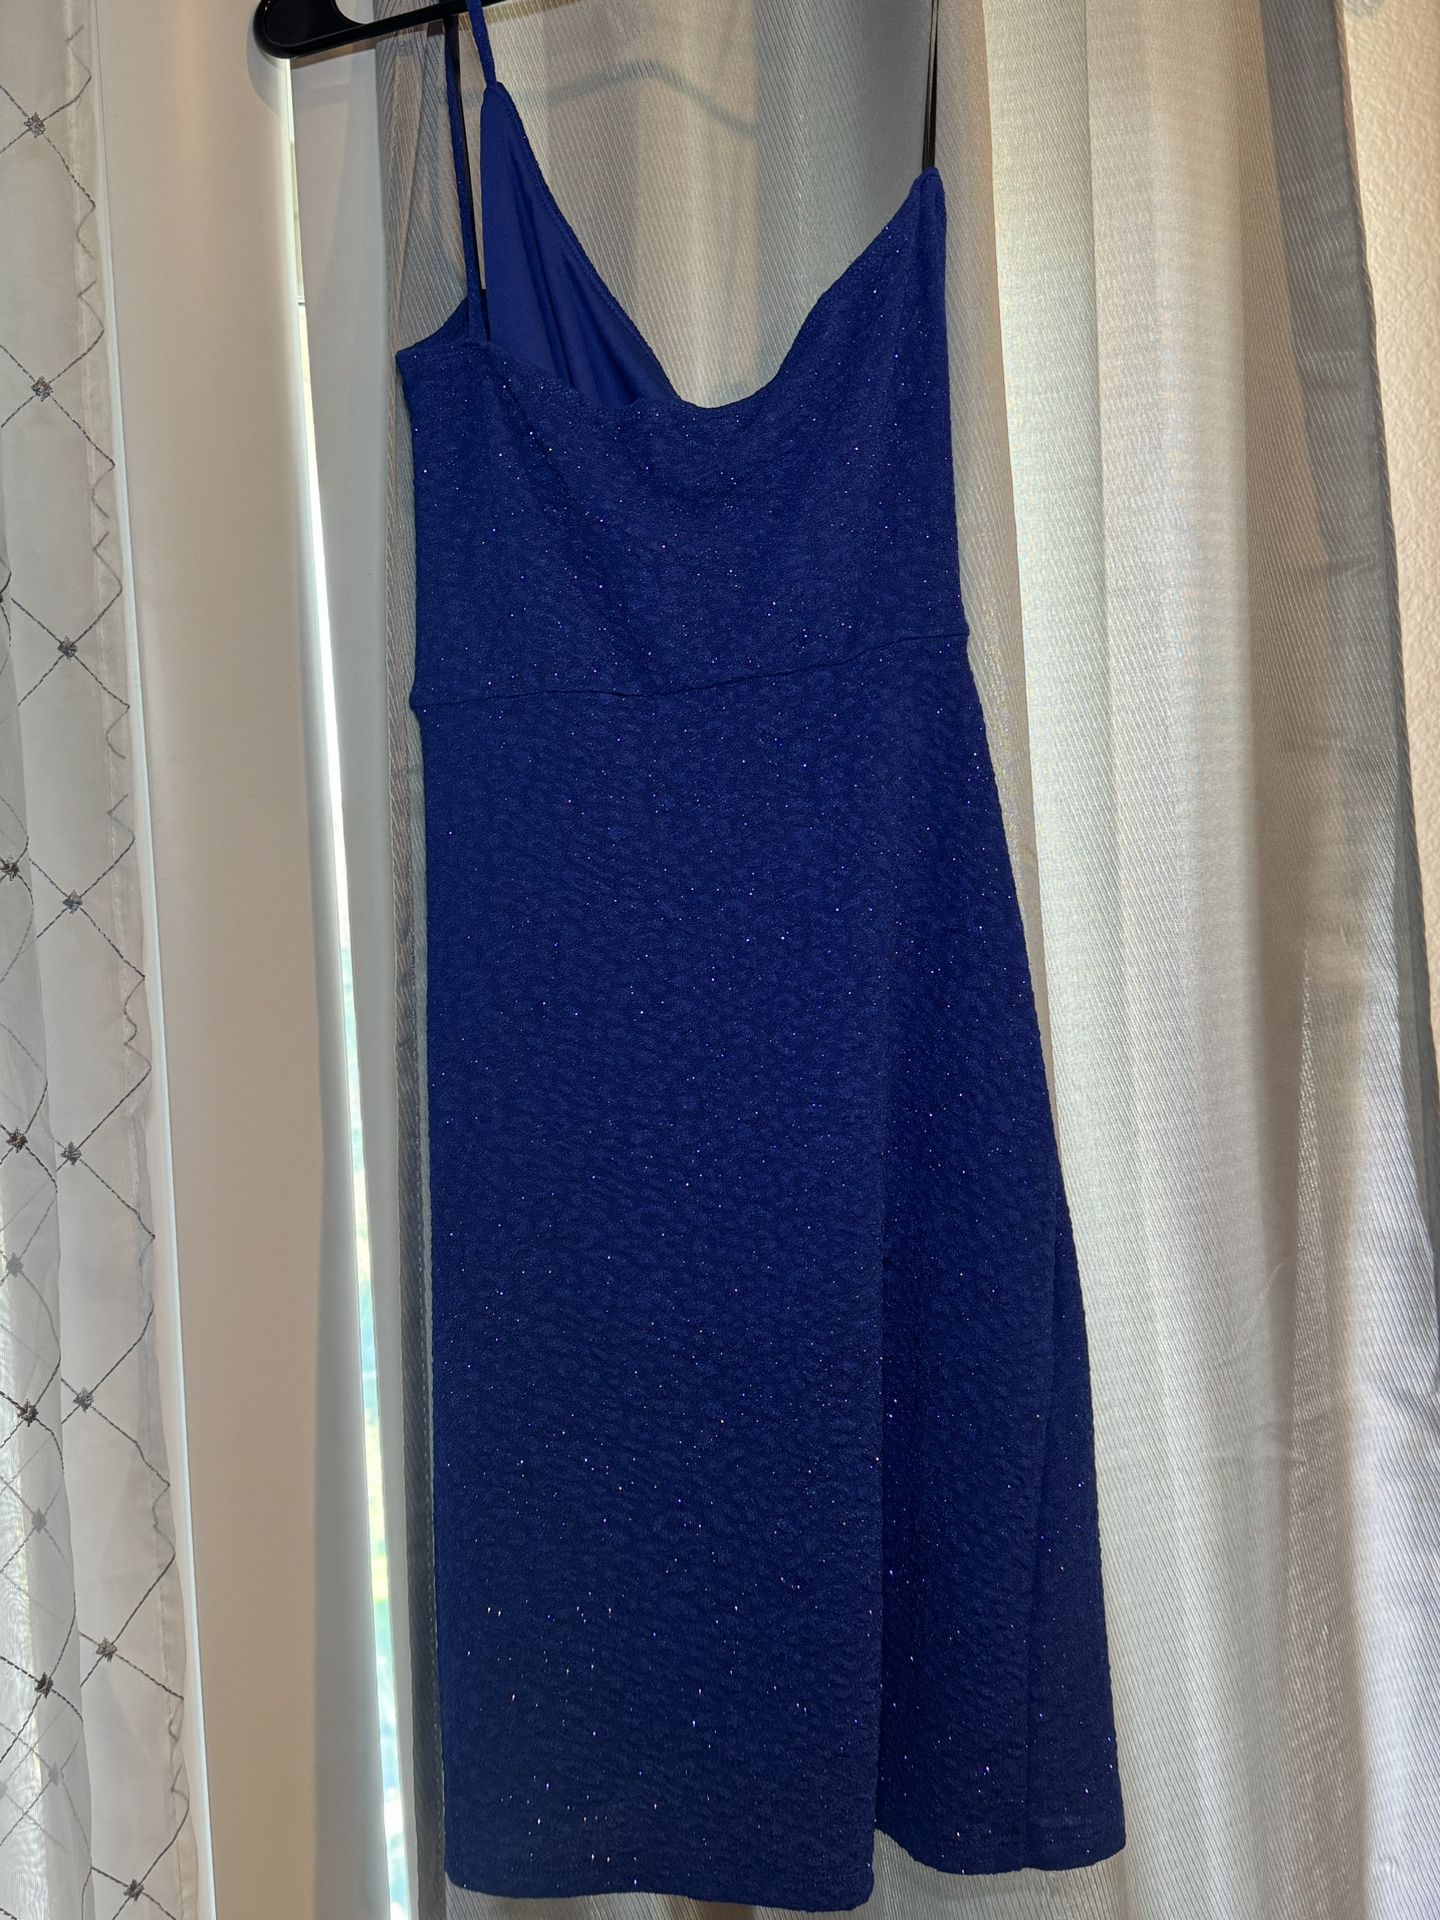 Blue Sparkling Dress